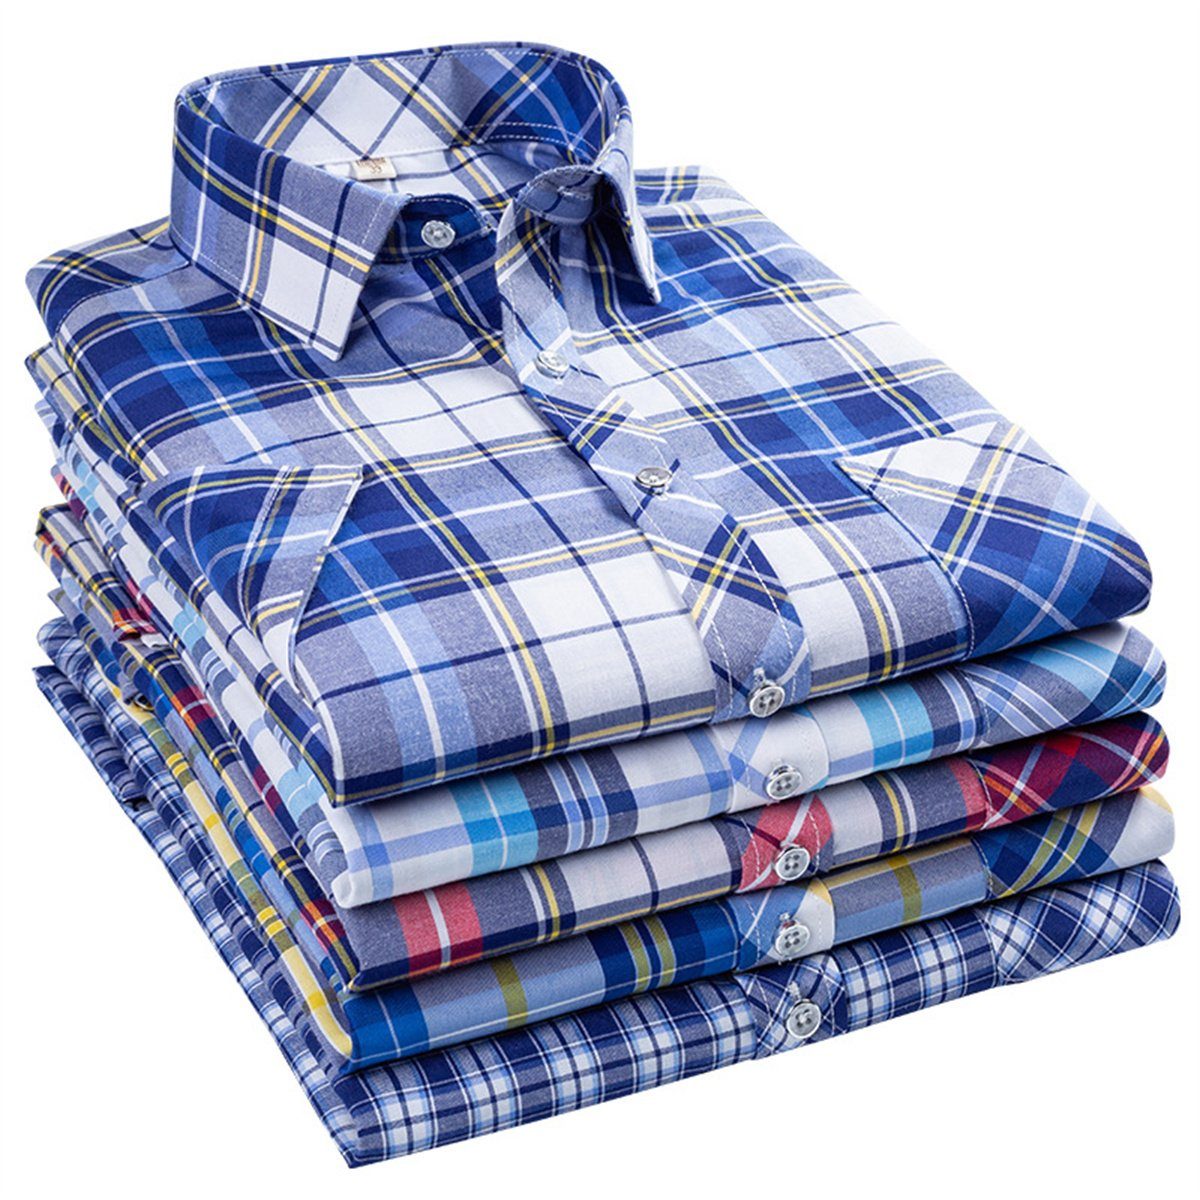 Discaver Trachtenhemd Herrenhemd, lässiges reguläre azurblau Popeline-Hemd kurzärmlig, Passform